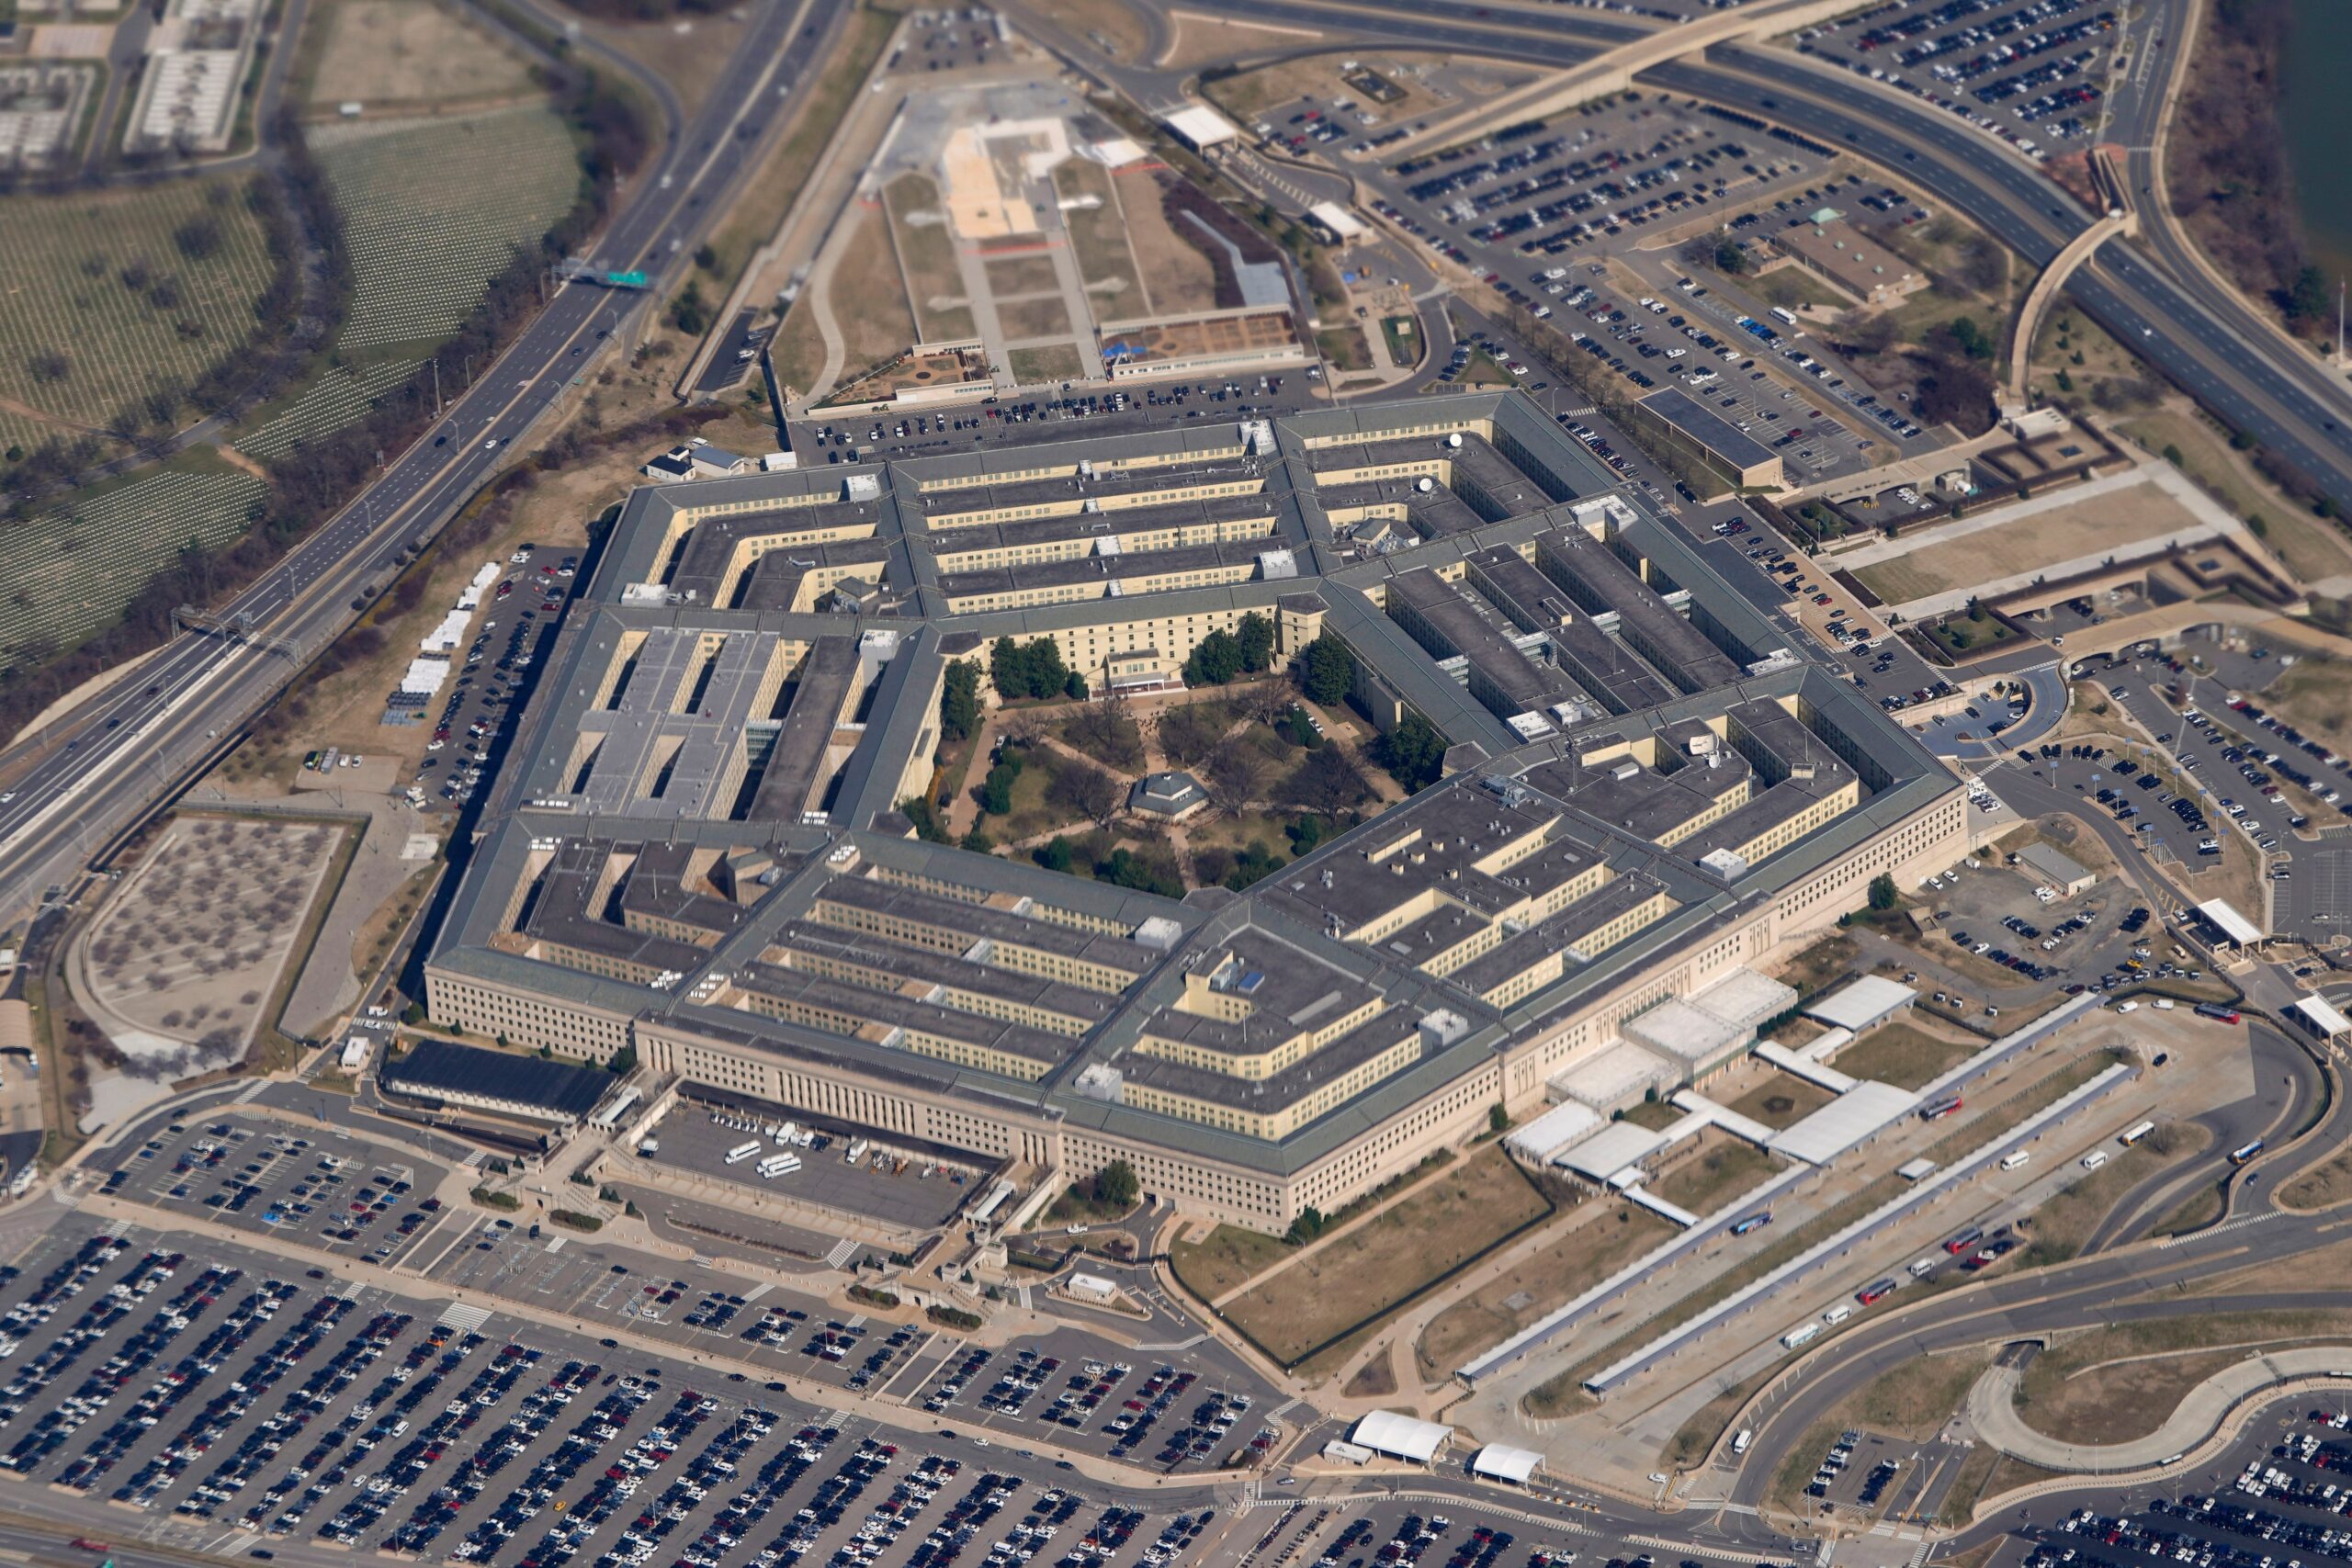 service-member-found-dead-in-vehicle-in-pentagon-parking-lot